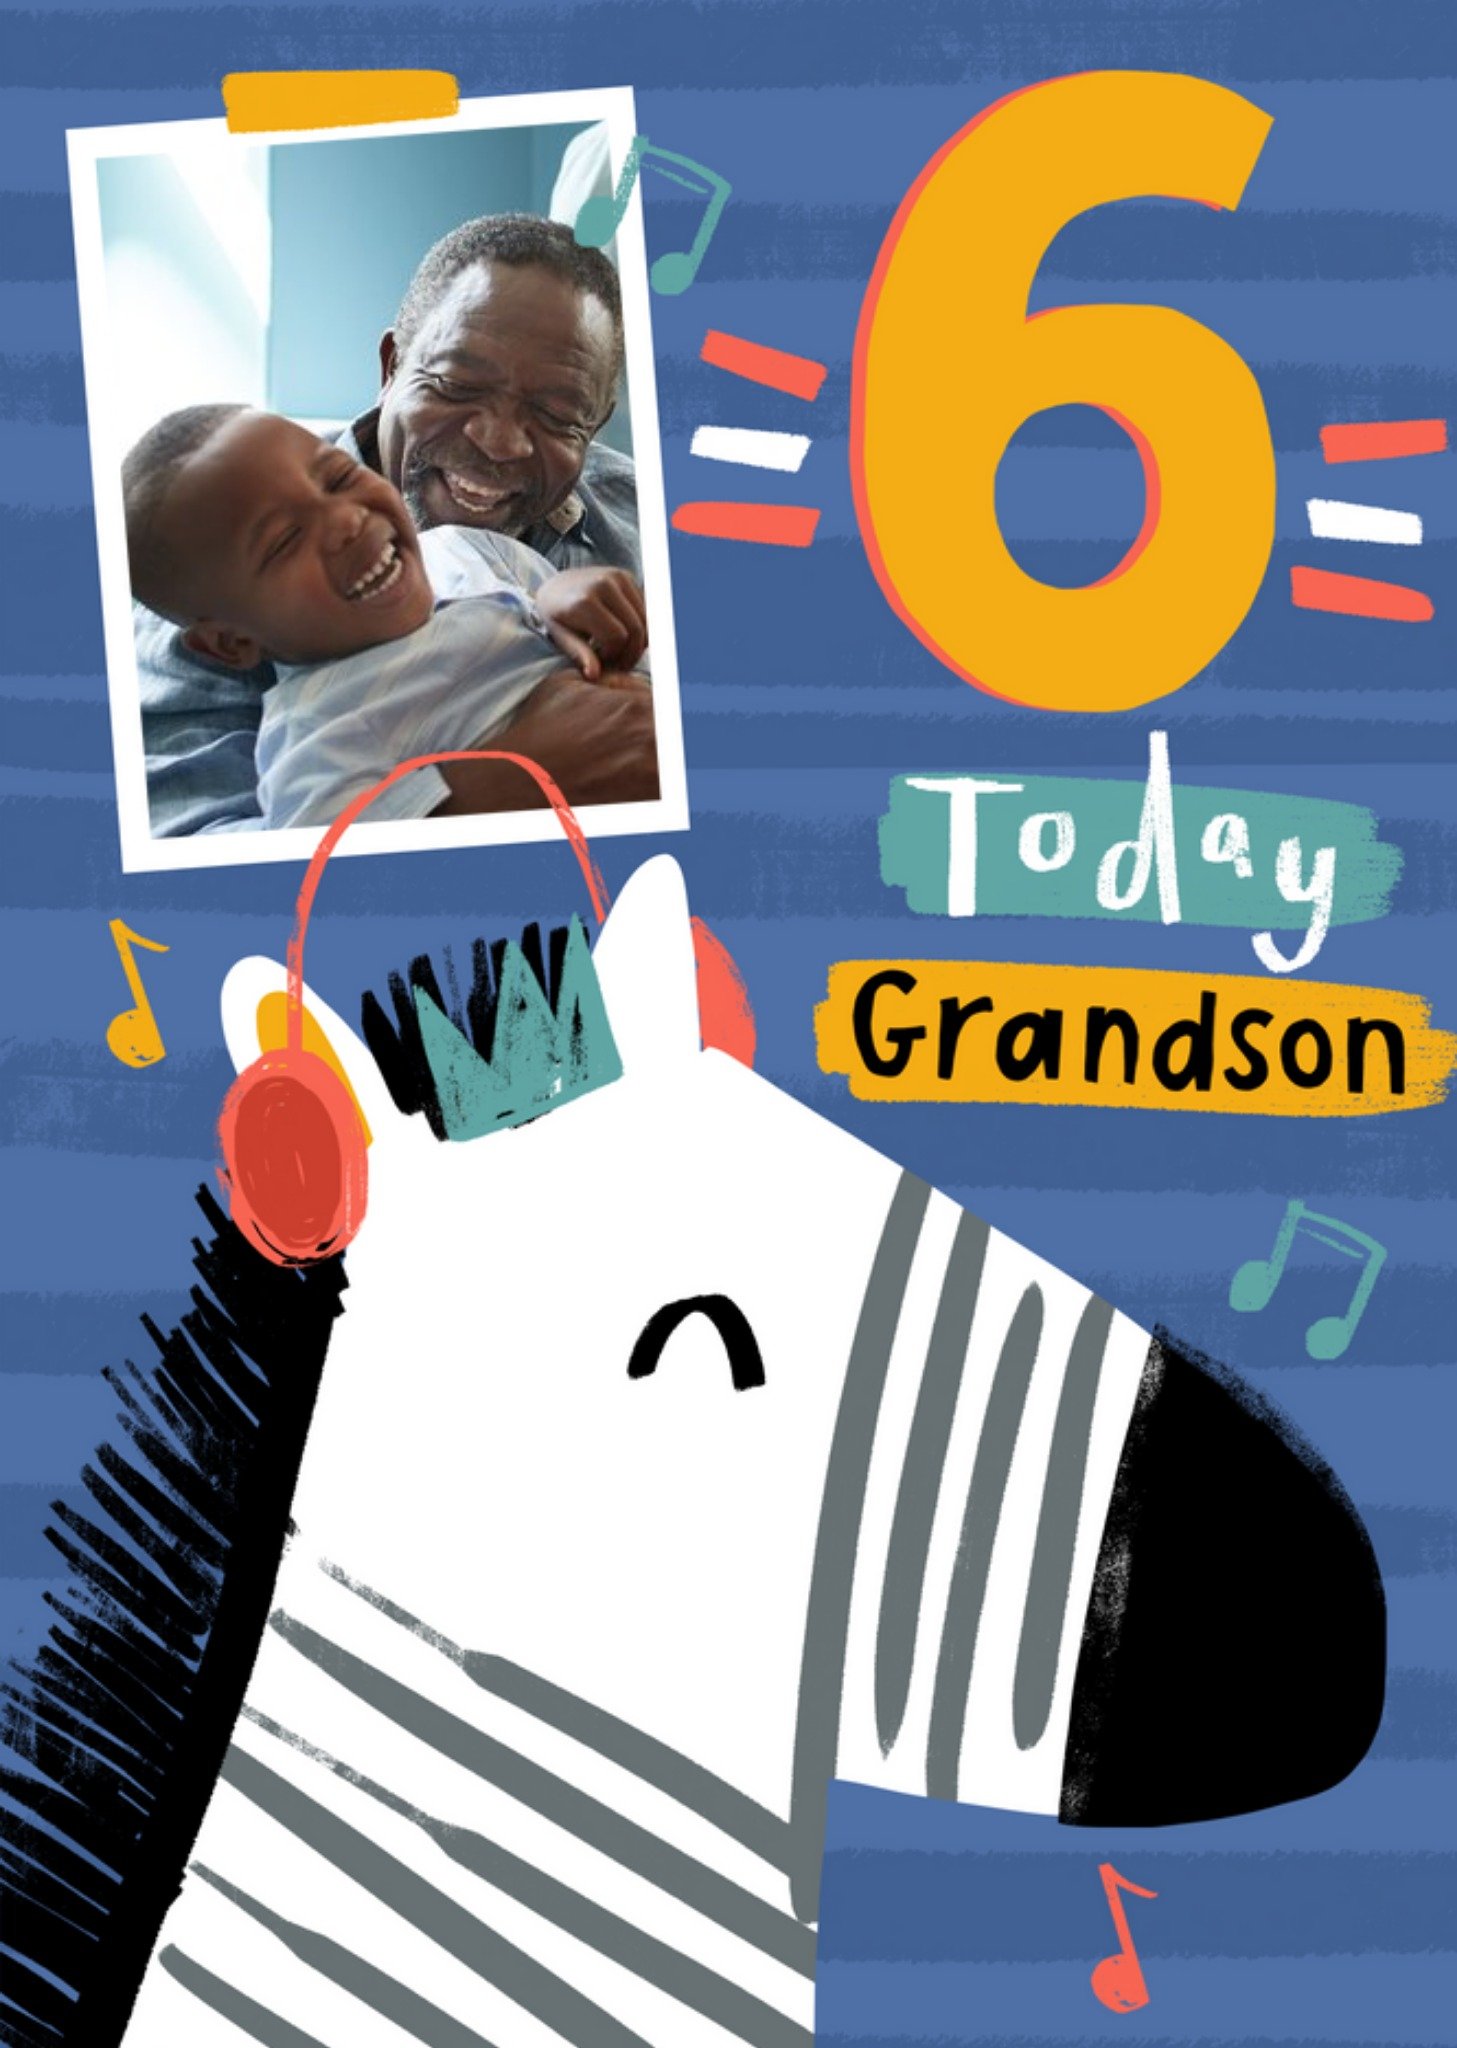 Moonpig Zebra 6 Today Grandson Photo Upload Birthday Card Ecard